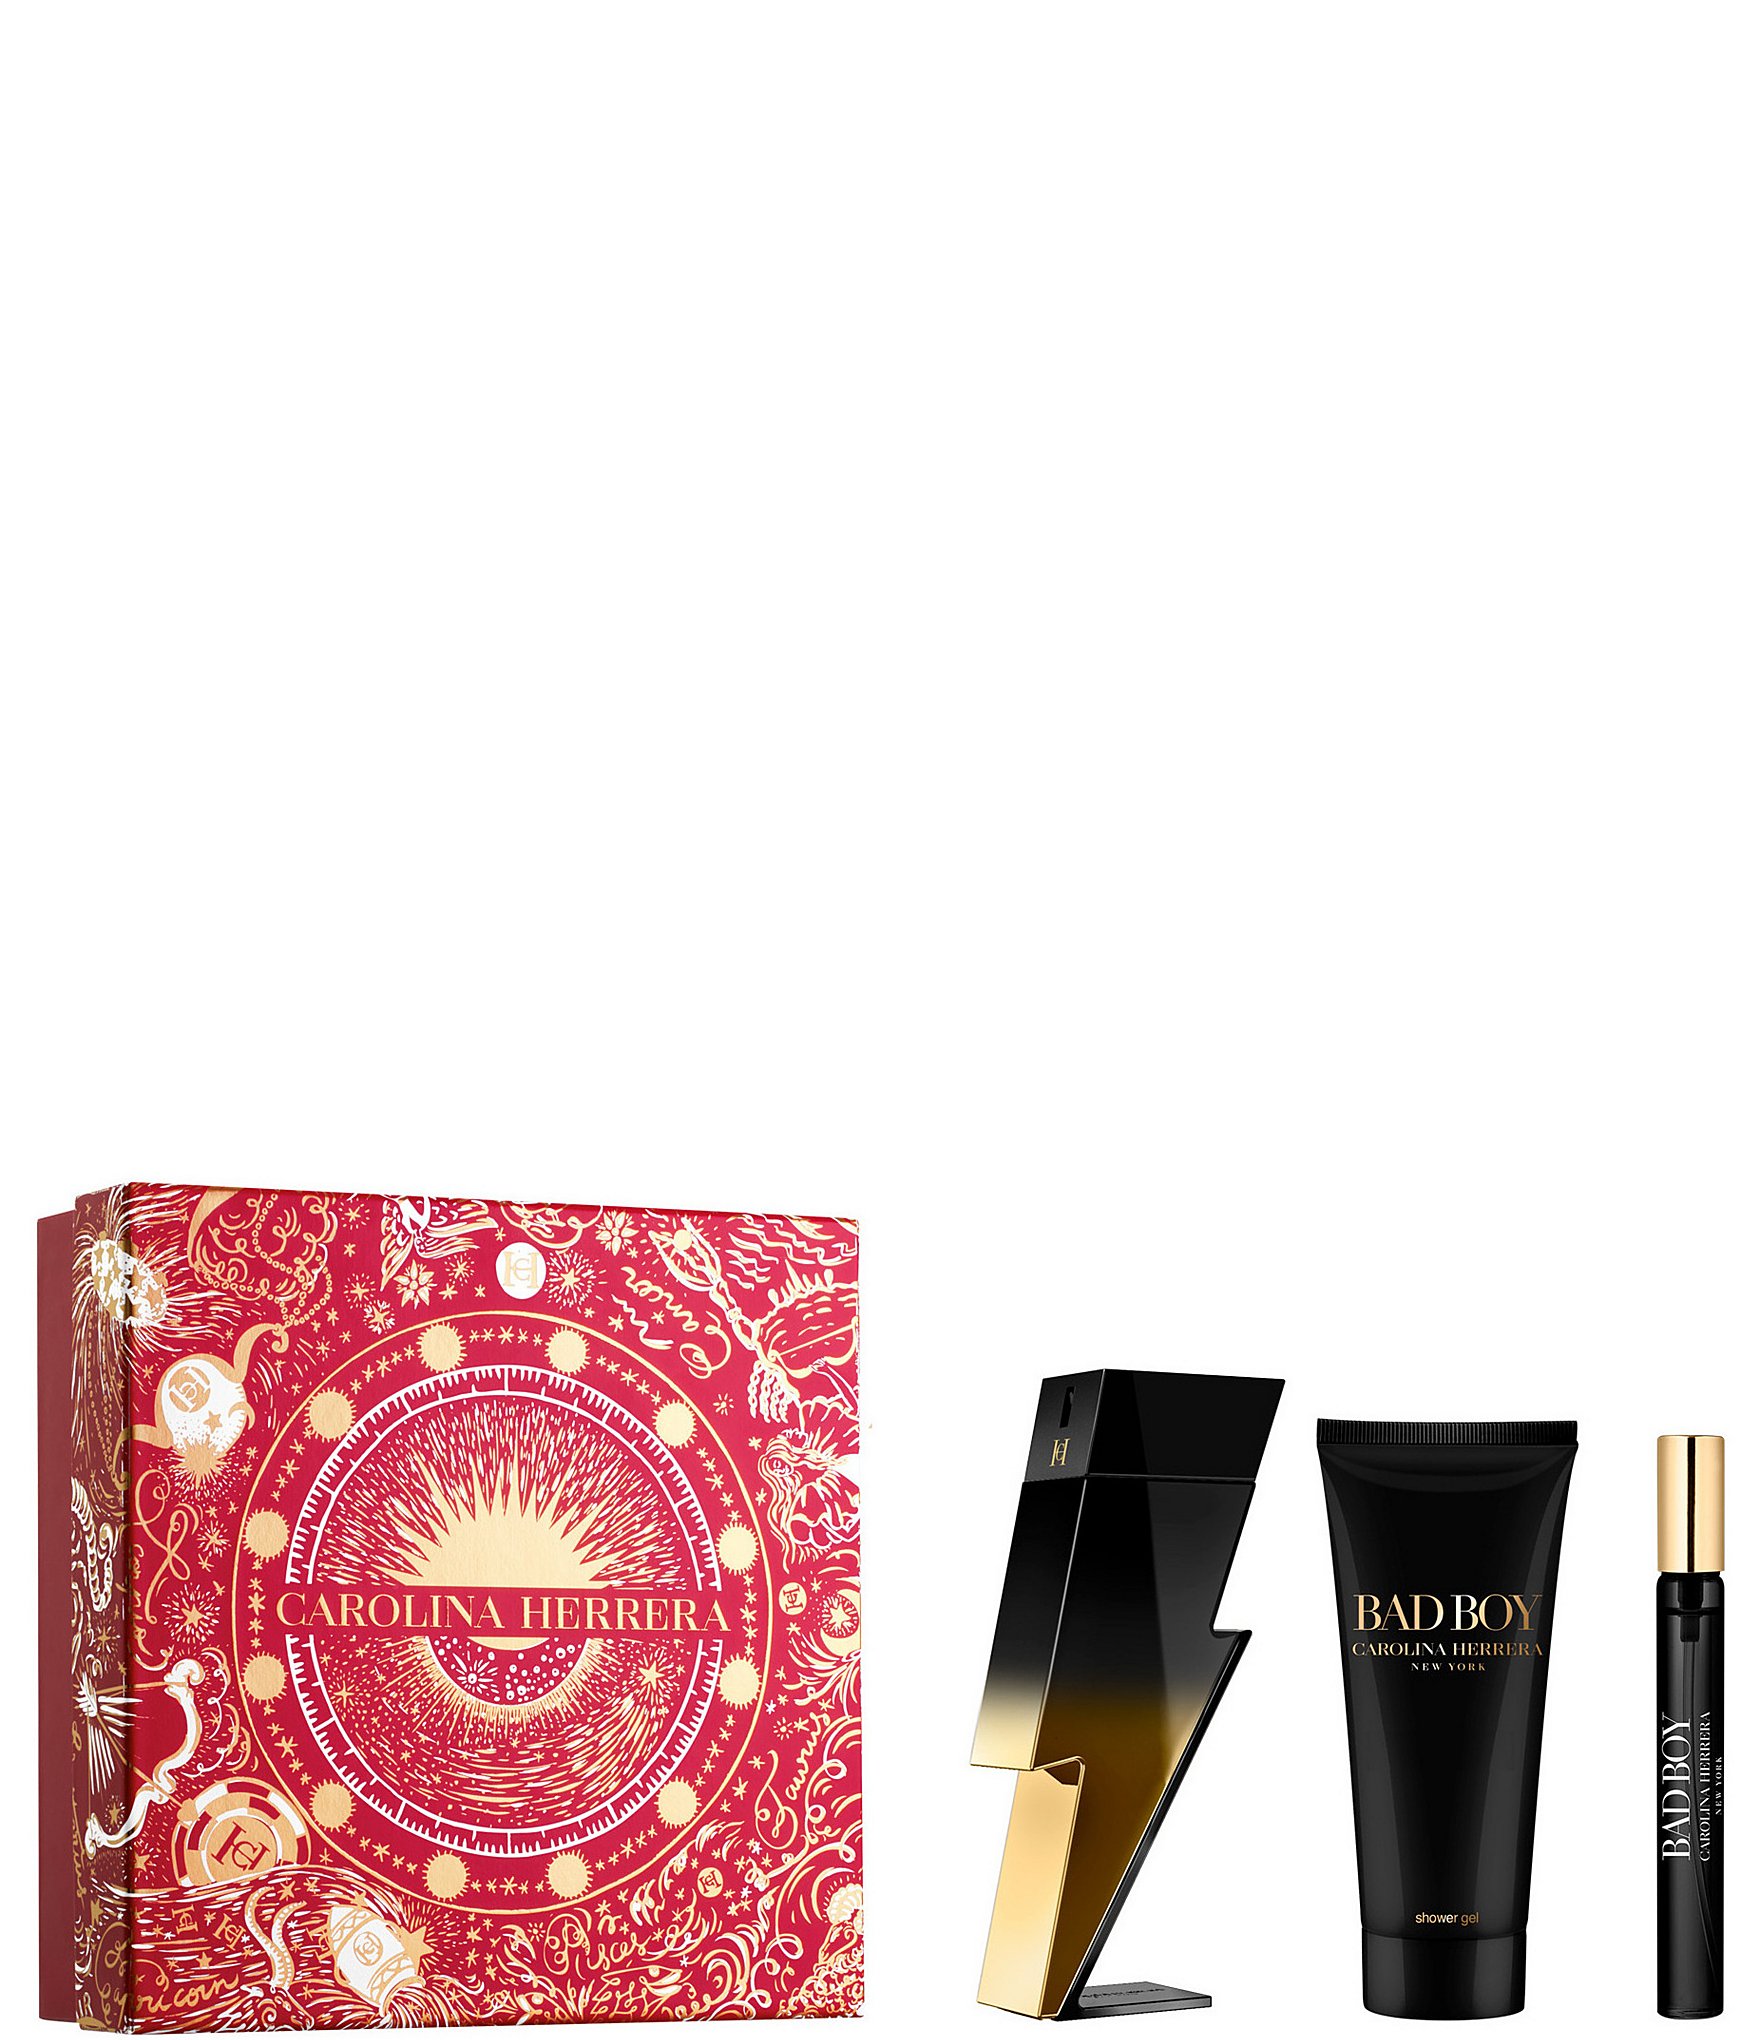 Carolina Herrera Bad Boy Extreme Eau de Parfum 3 Piece Gift Set